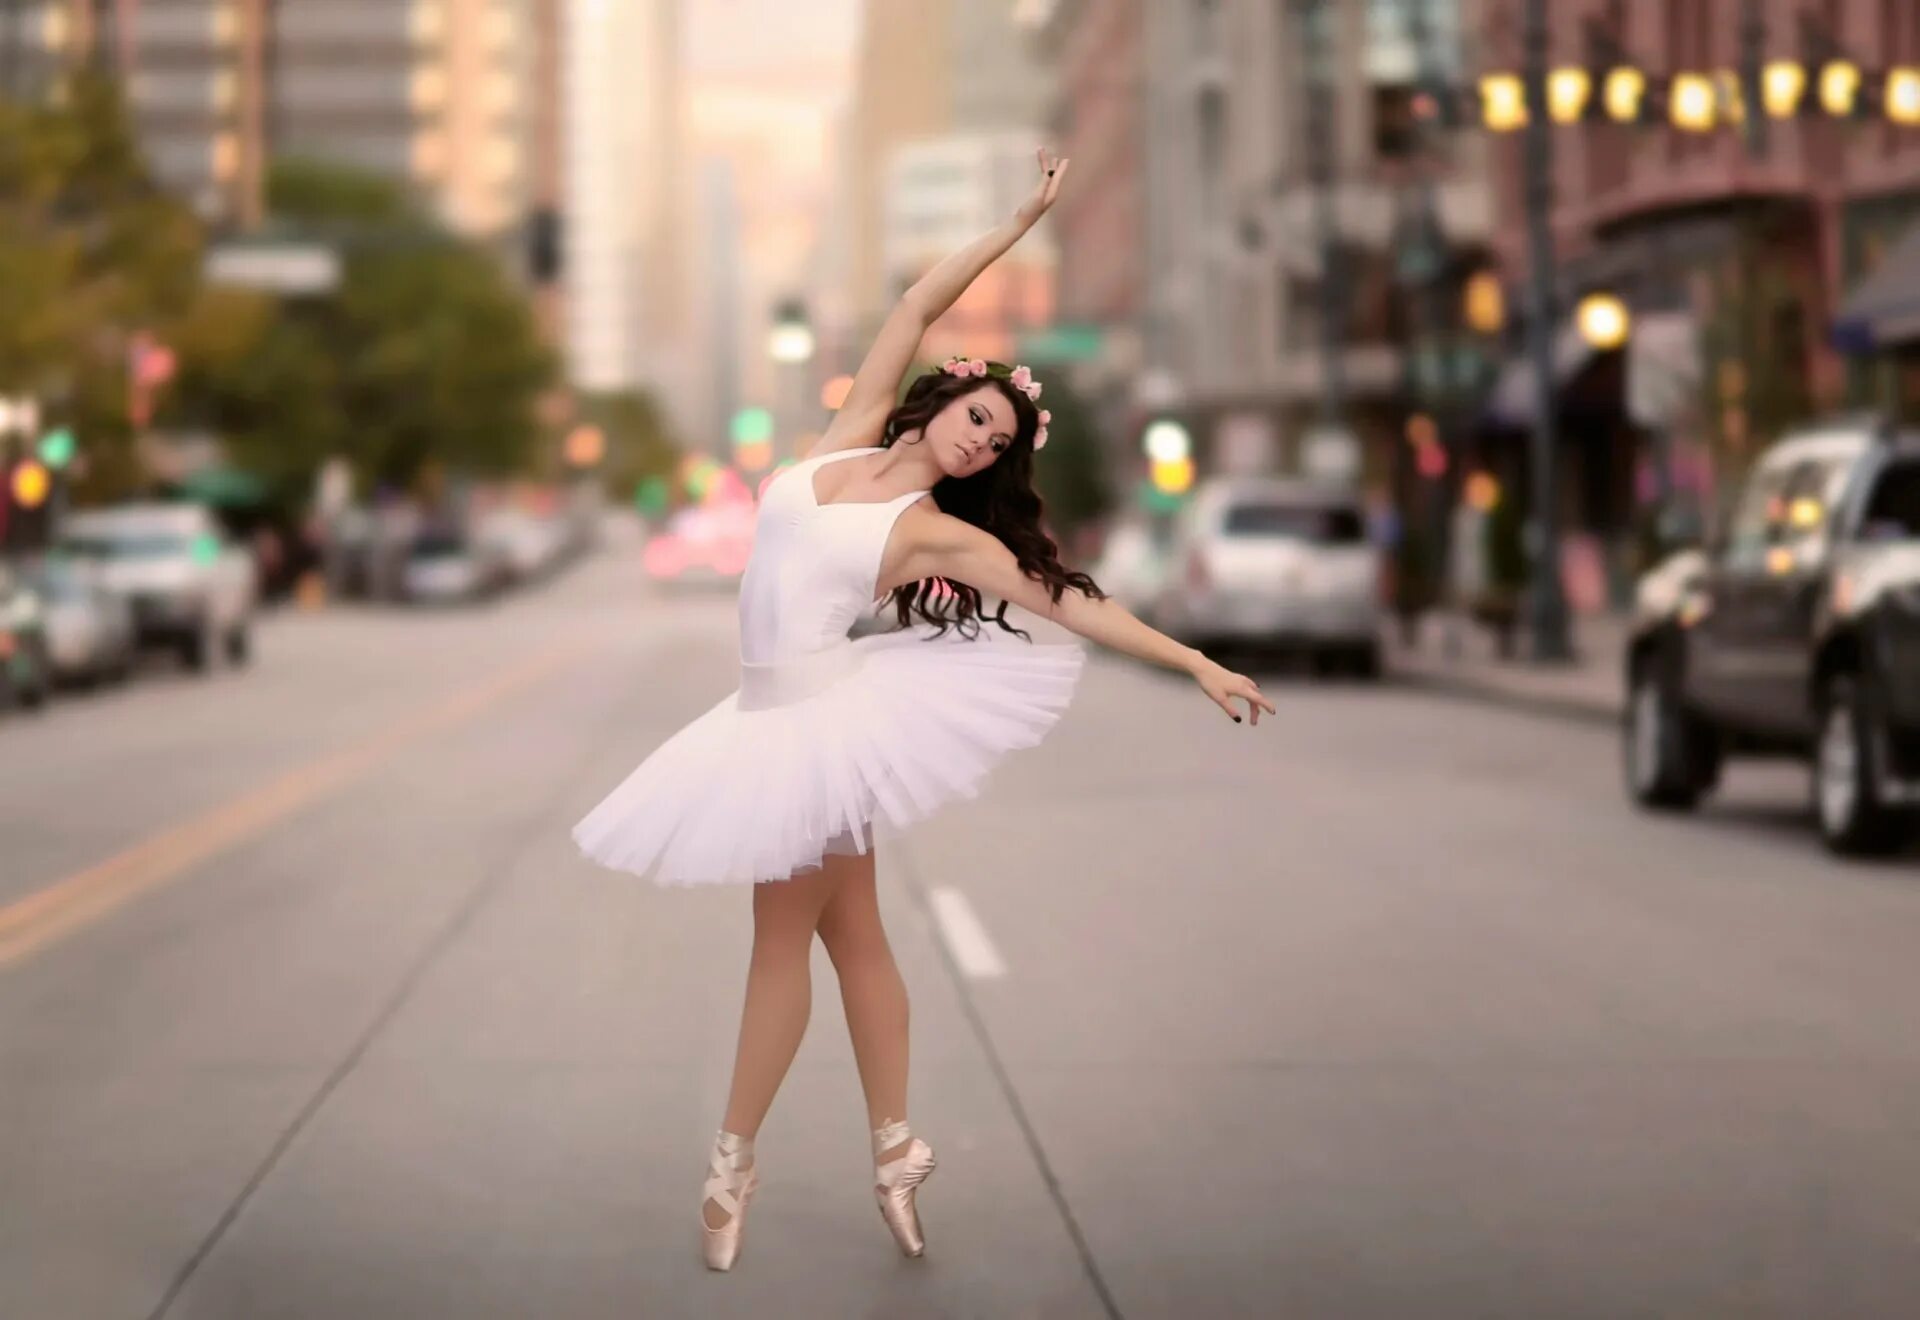 Балерина танцует. Девушка балерина. Девушка в балетной пачке. Танцы на улице. Балерина в городе.